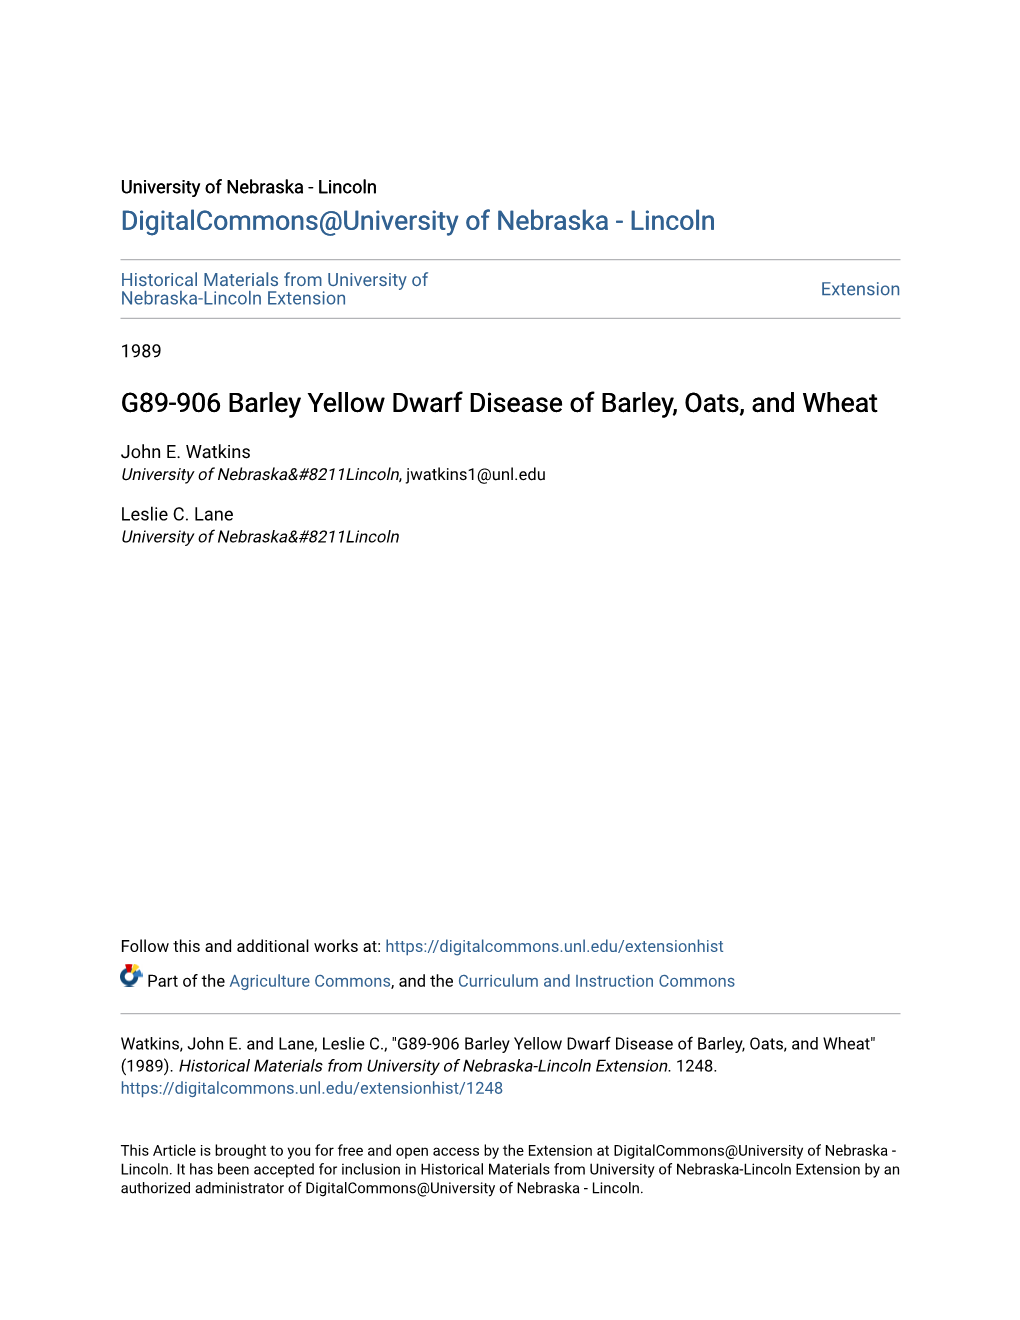 G89-906 Barley Yellow Dwarf Disease of Barley, Oats, and Wheat